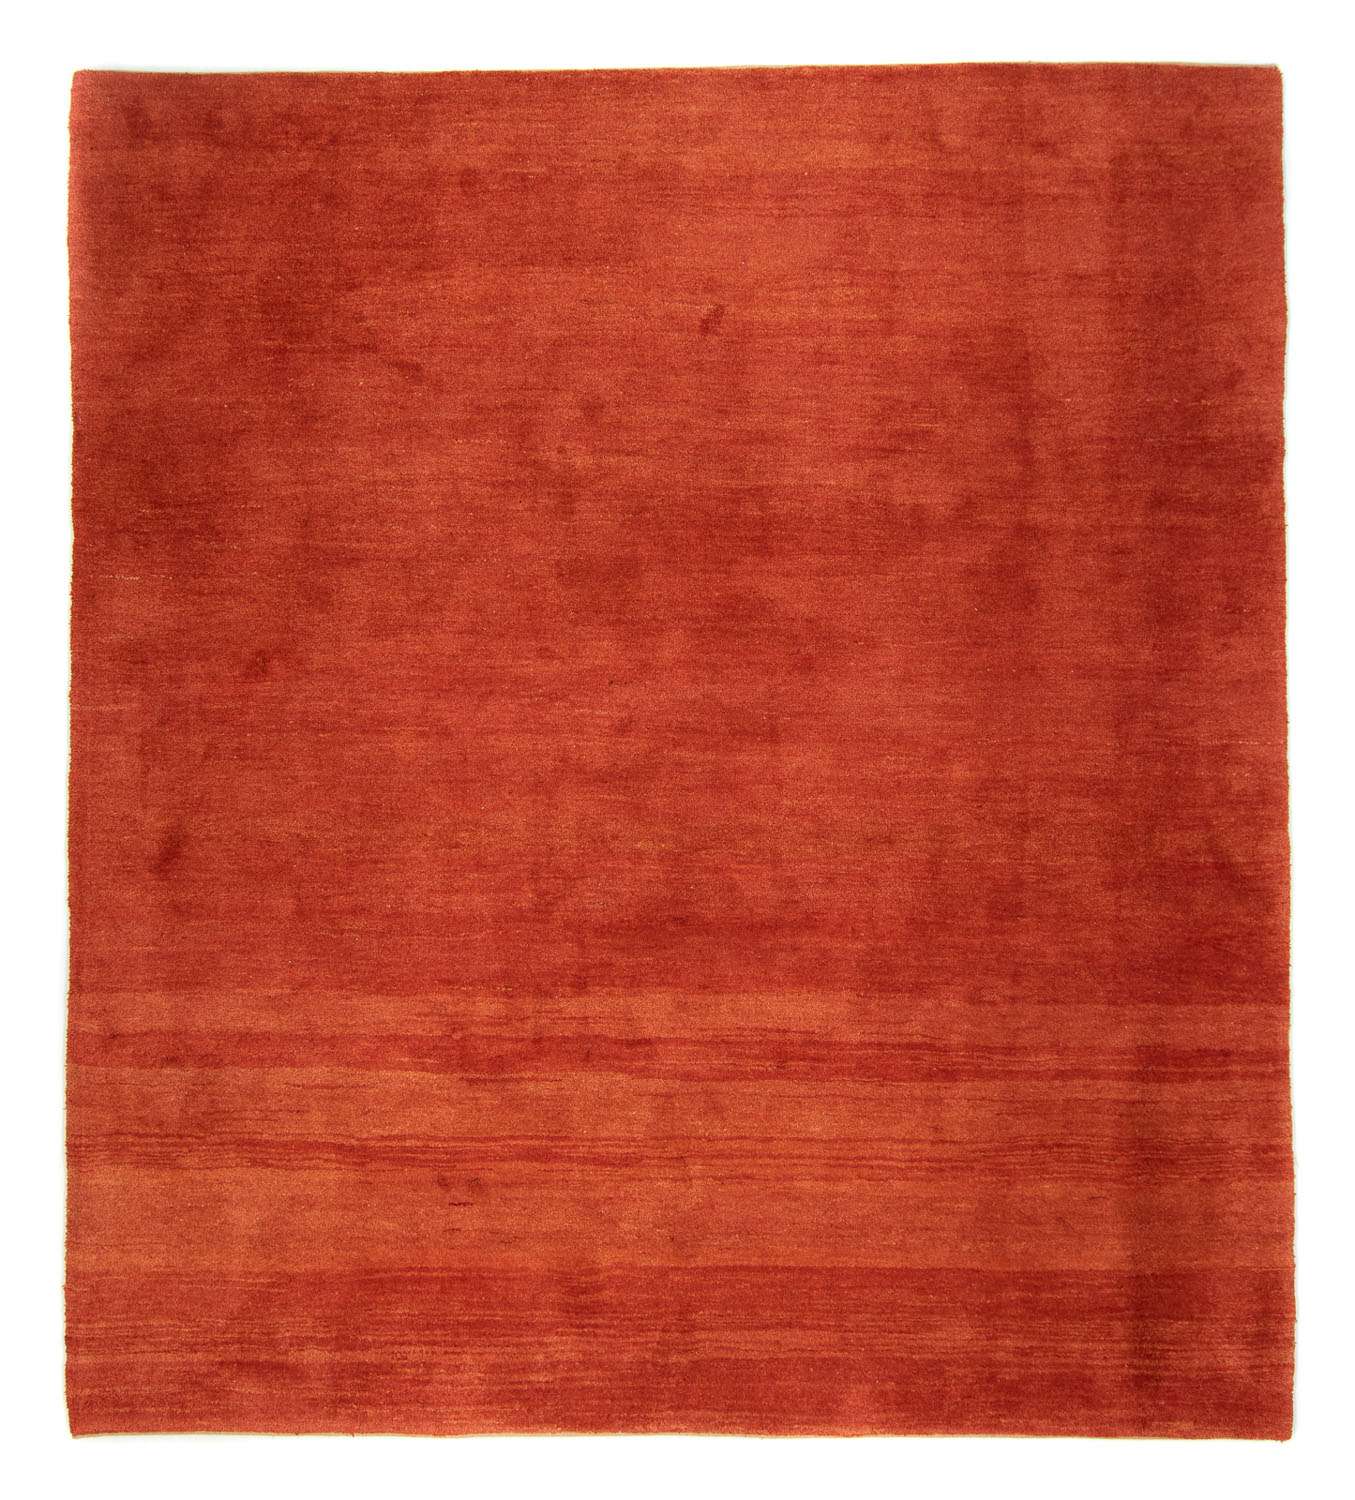 Gabbeh-matta - persisk kvadrat  - 317 x 285 cm - röd